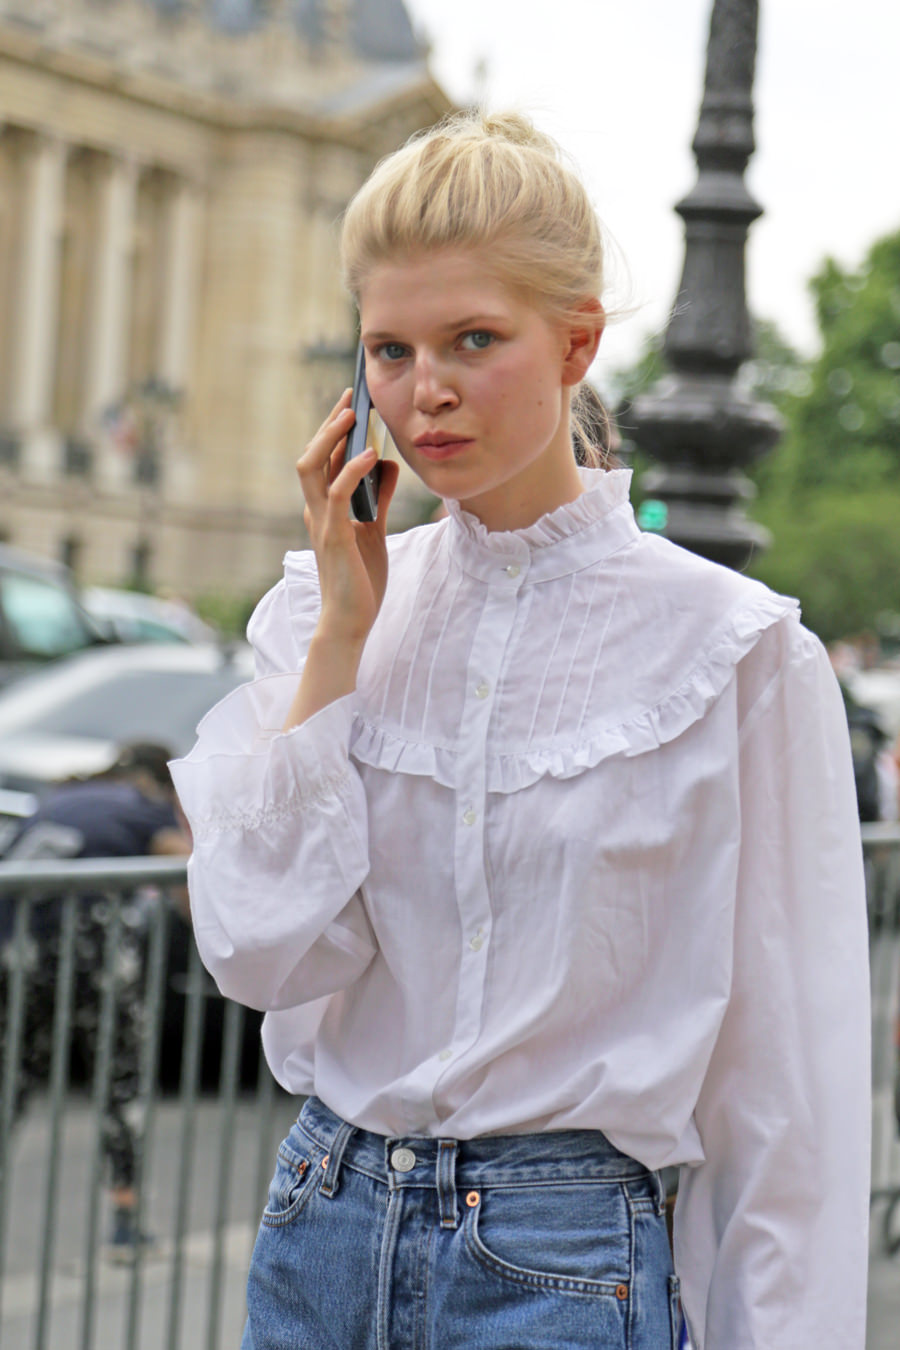 model-off-duty-wearing-a-vintage-white-blouse